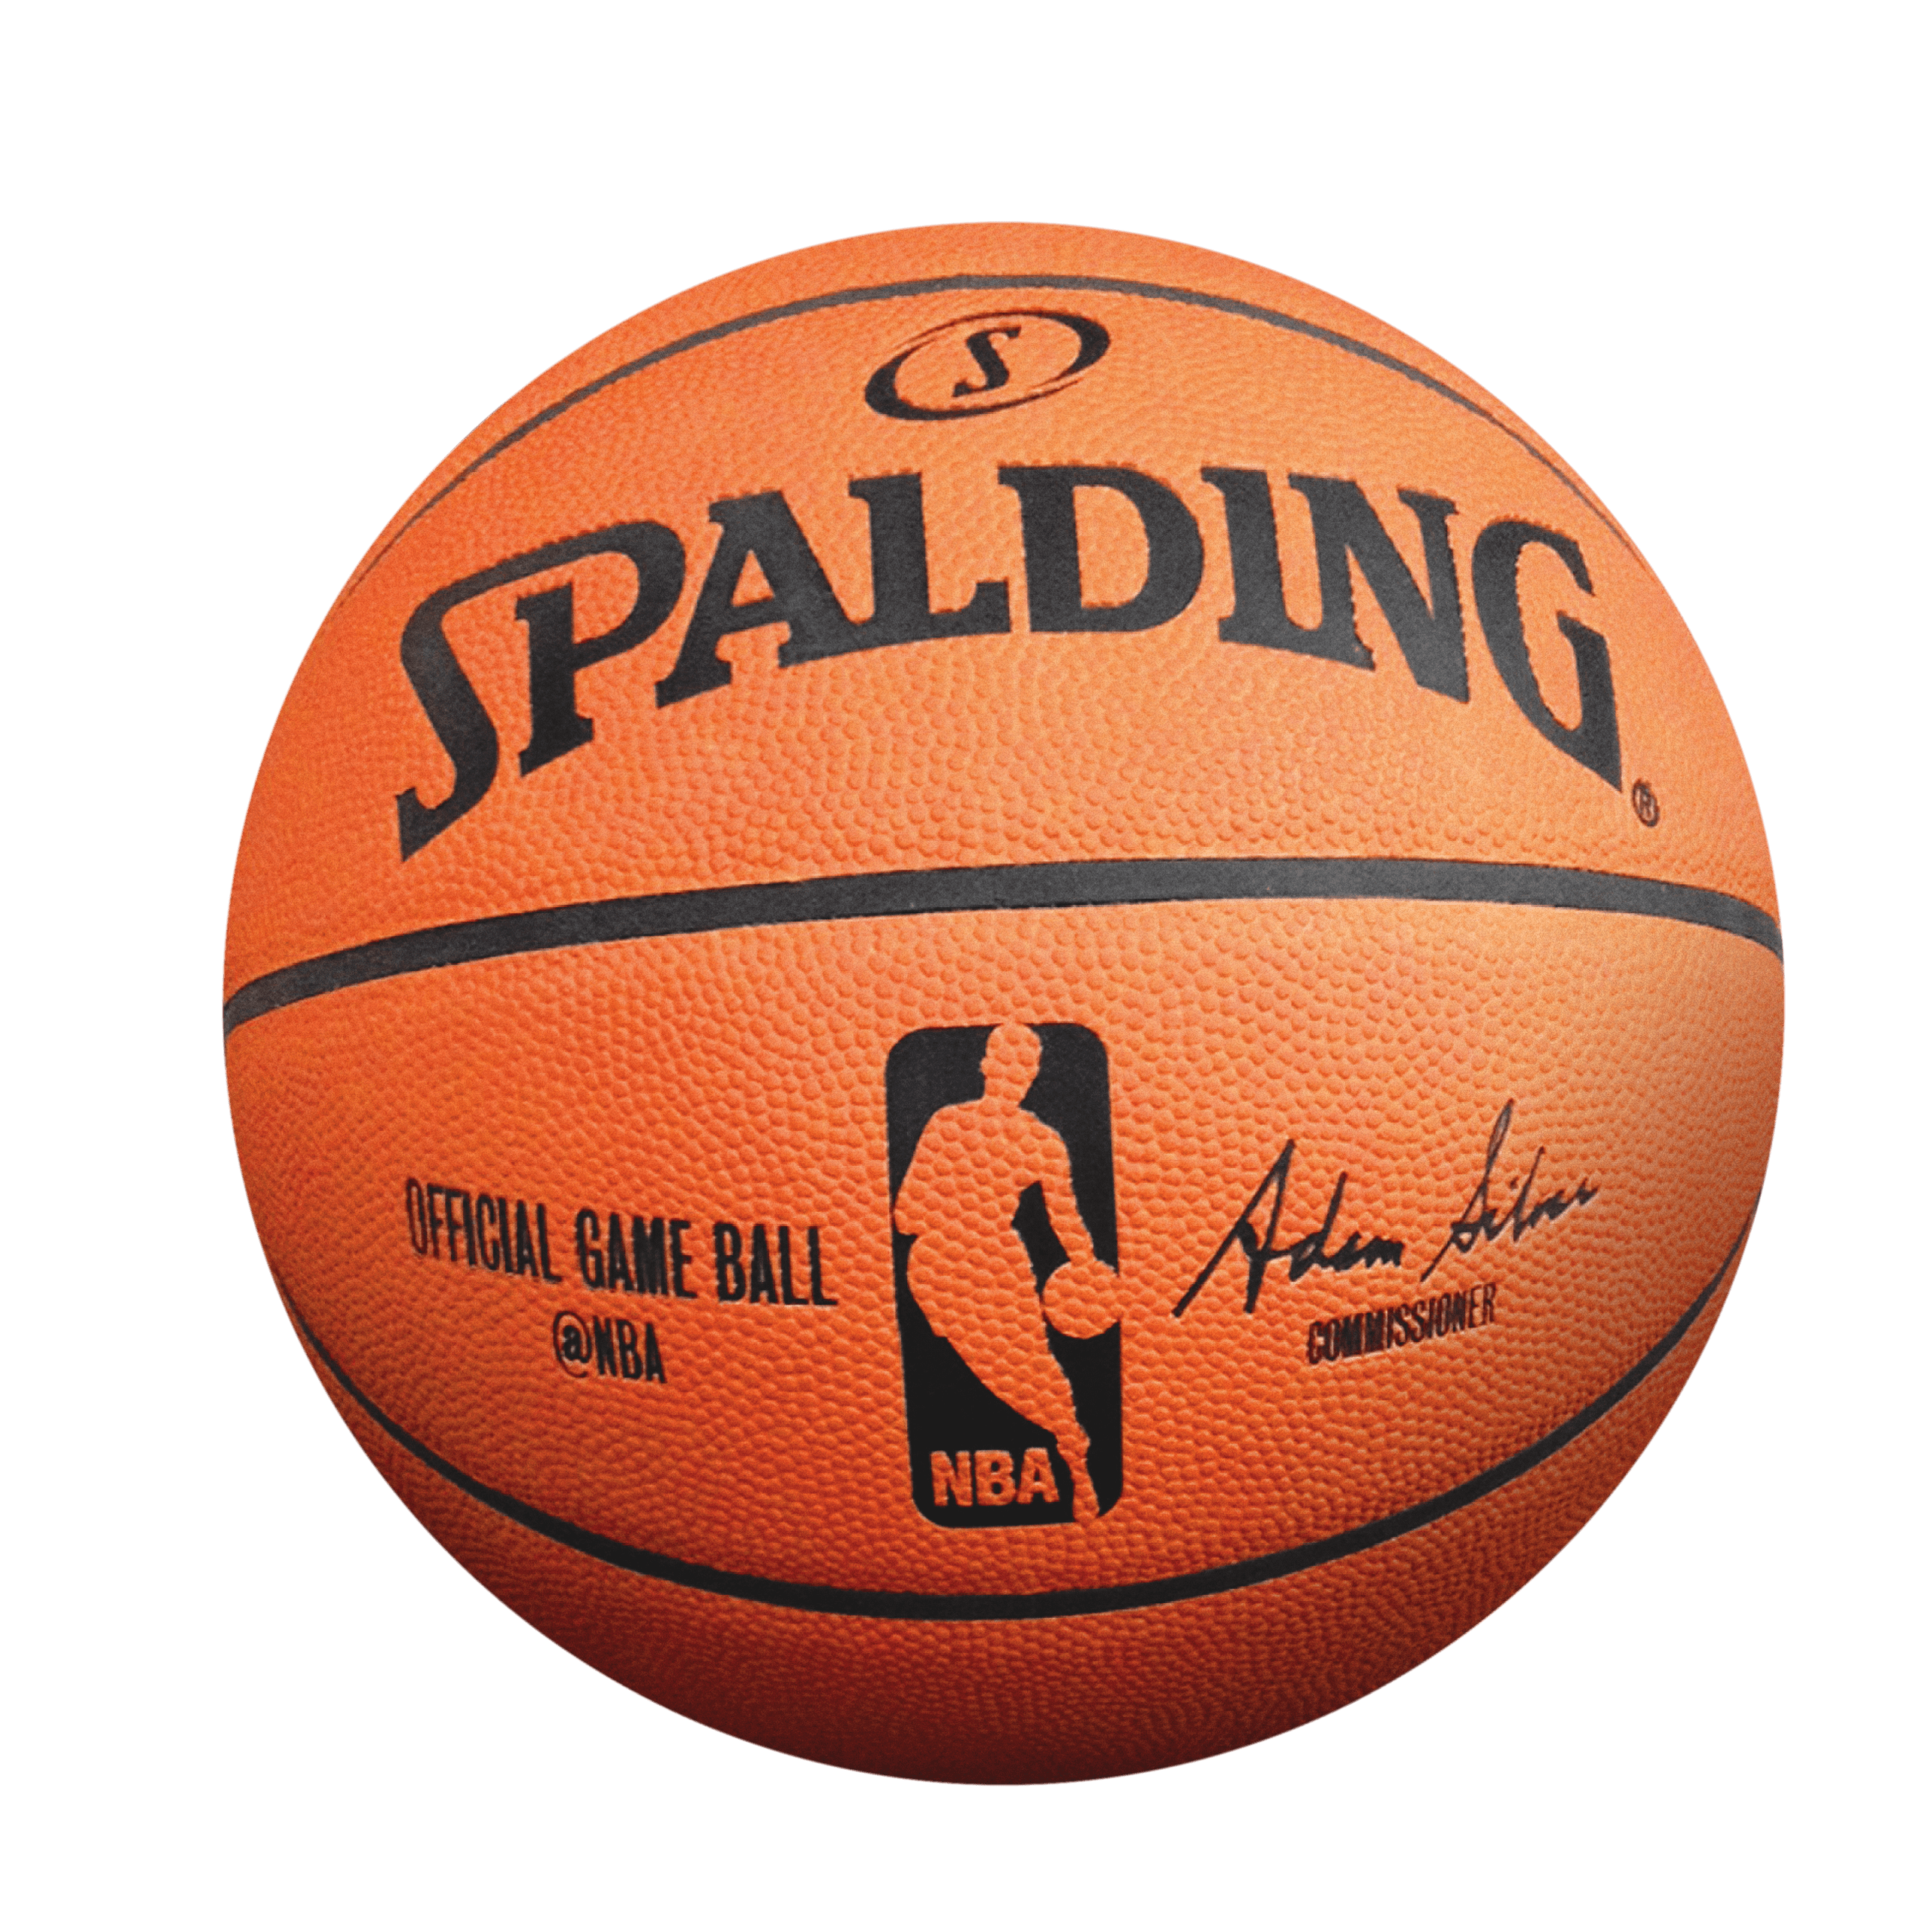 Spalding Basketball Transparent PNG File pngteam.com